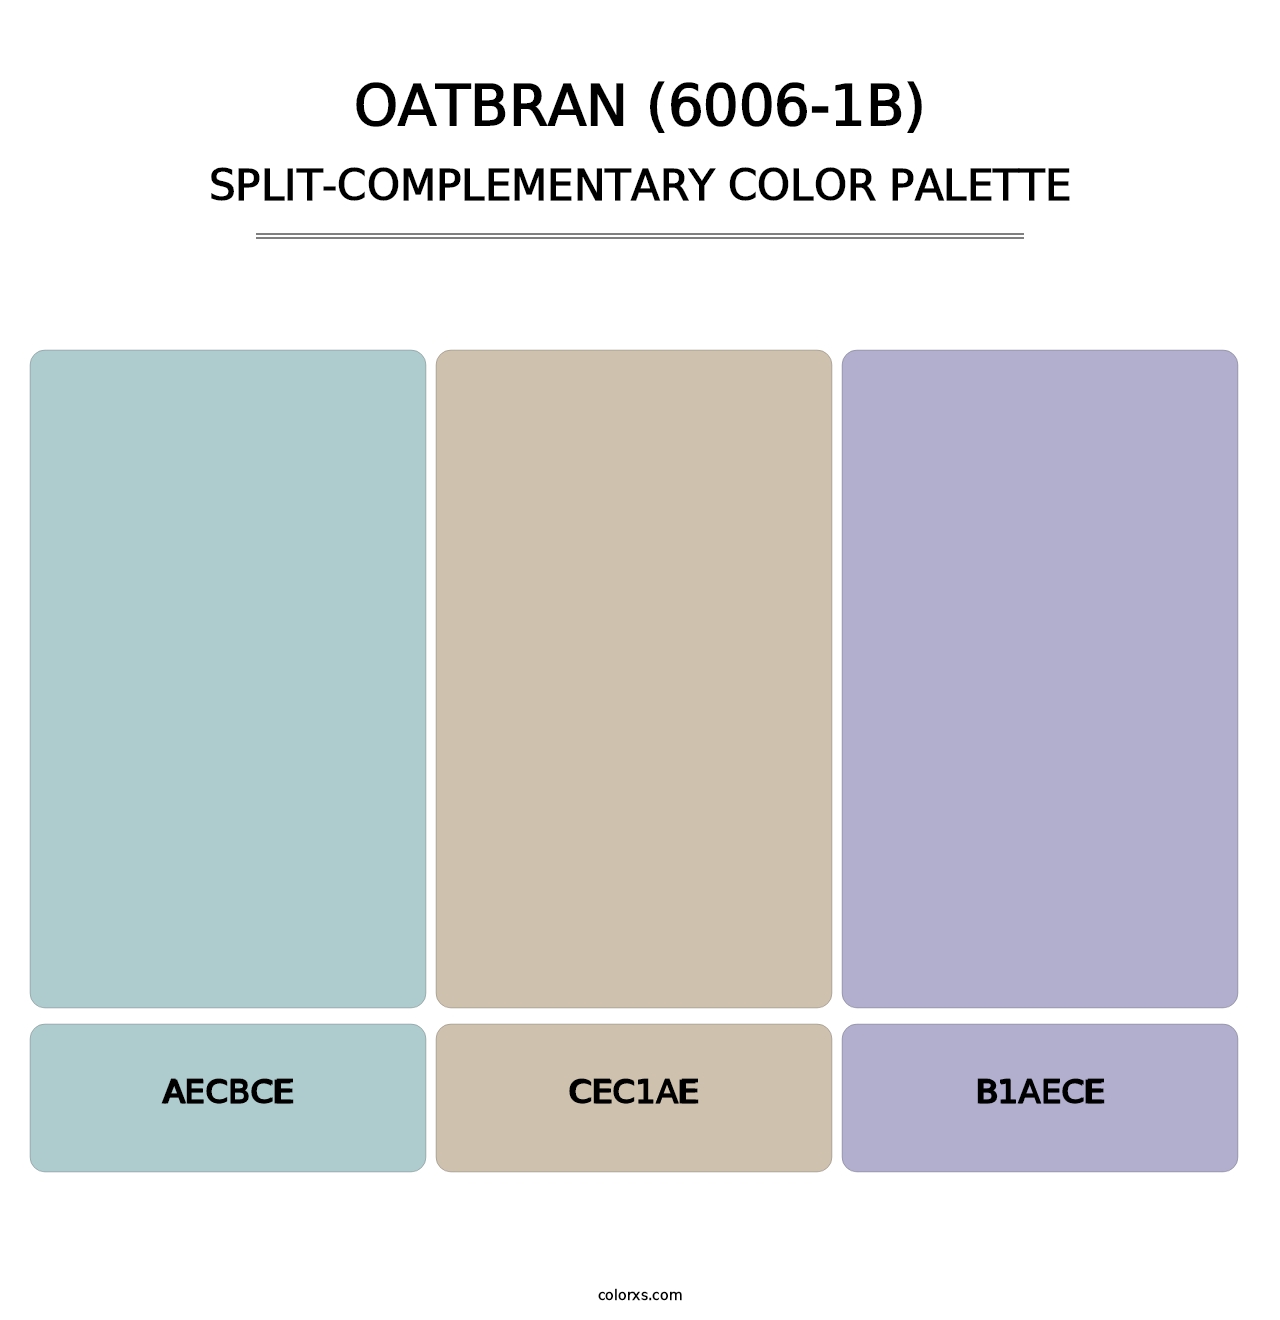 Oatbran (6006-1B) - Split-Complementary Color Palette